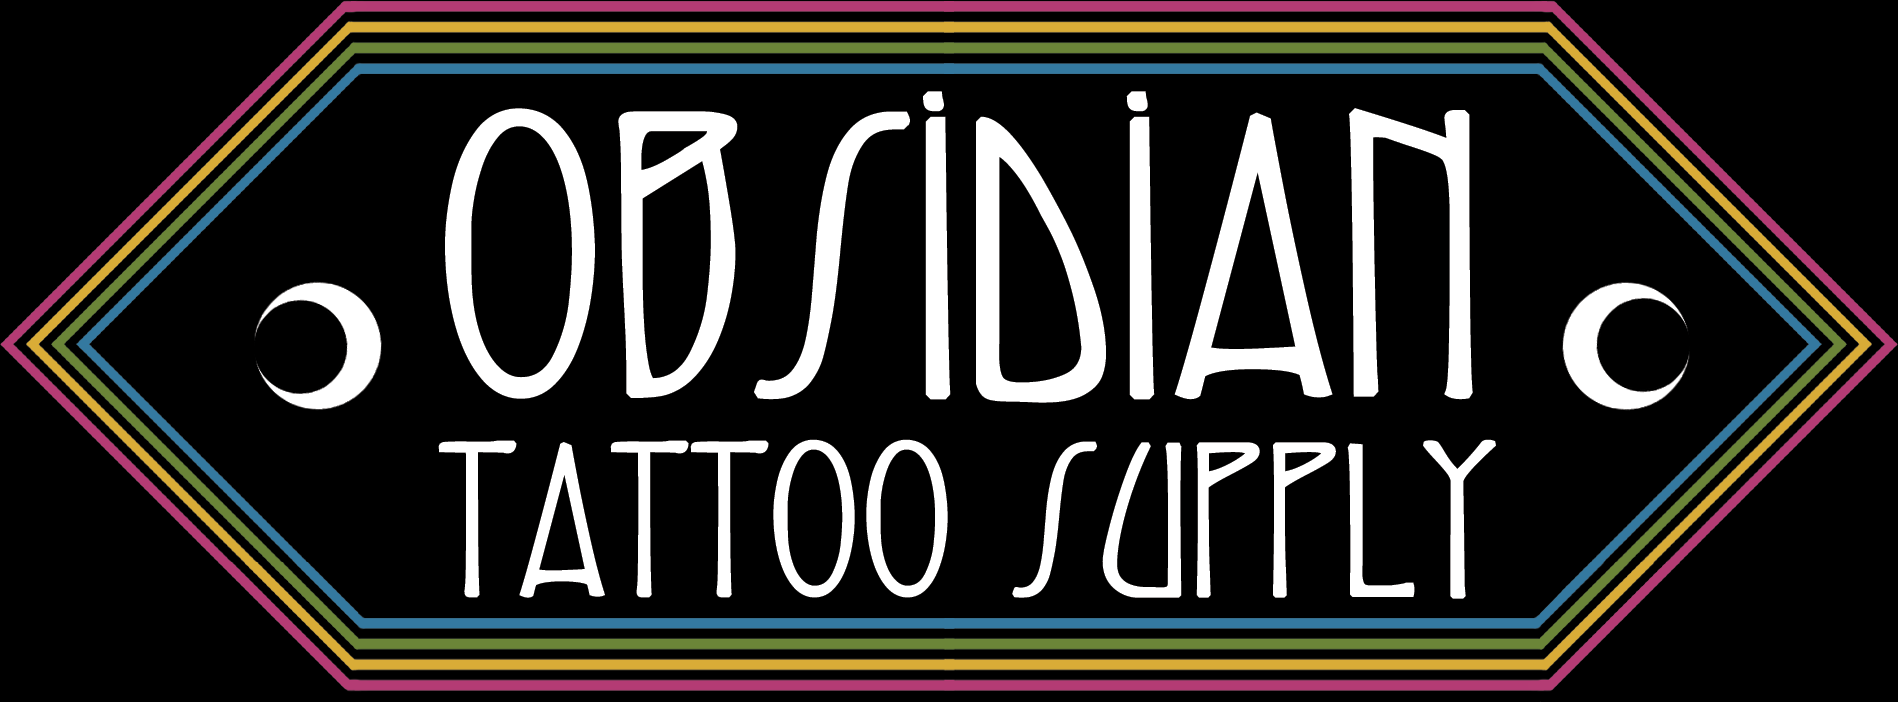 Dallastattoosuppliescom  By Dallas Tattoo Supplies  Facebook  Yeah yeah